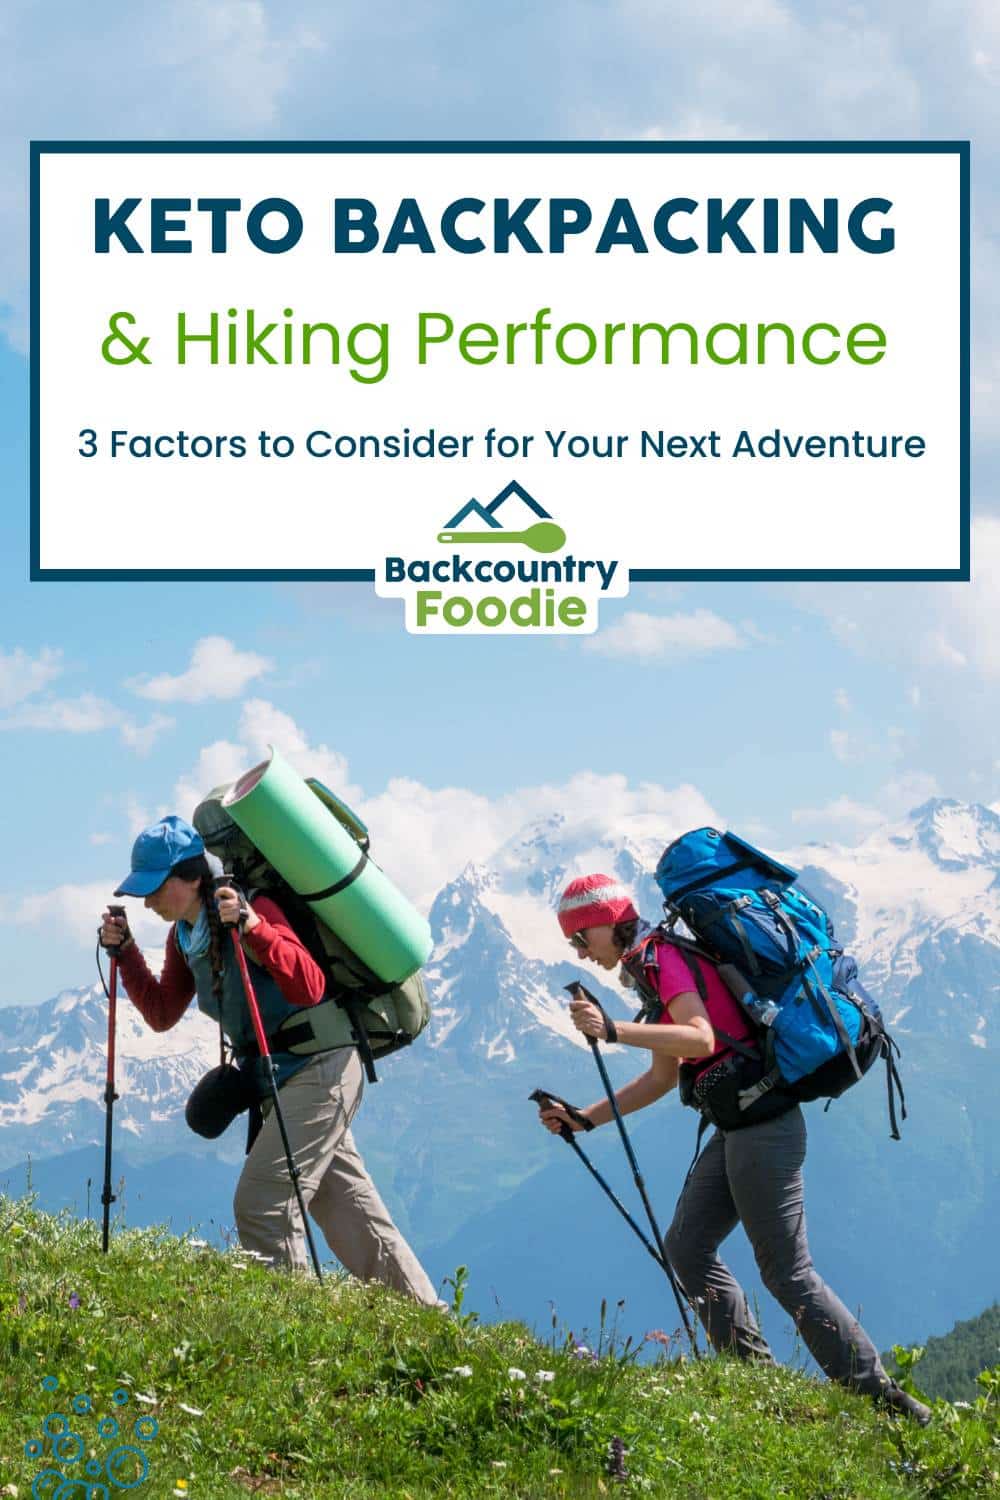 Backcountry Foodie blog Keto Backpacking Hiking Performance pinterest image